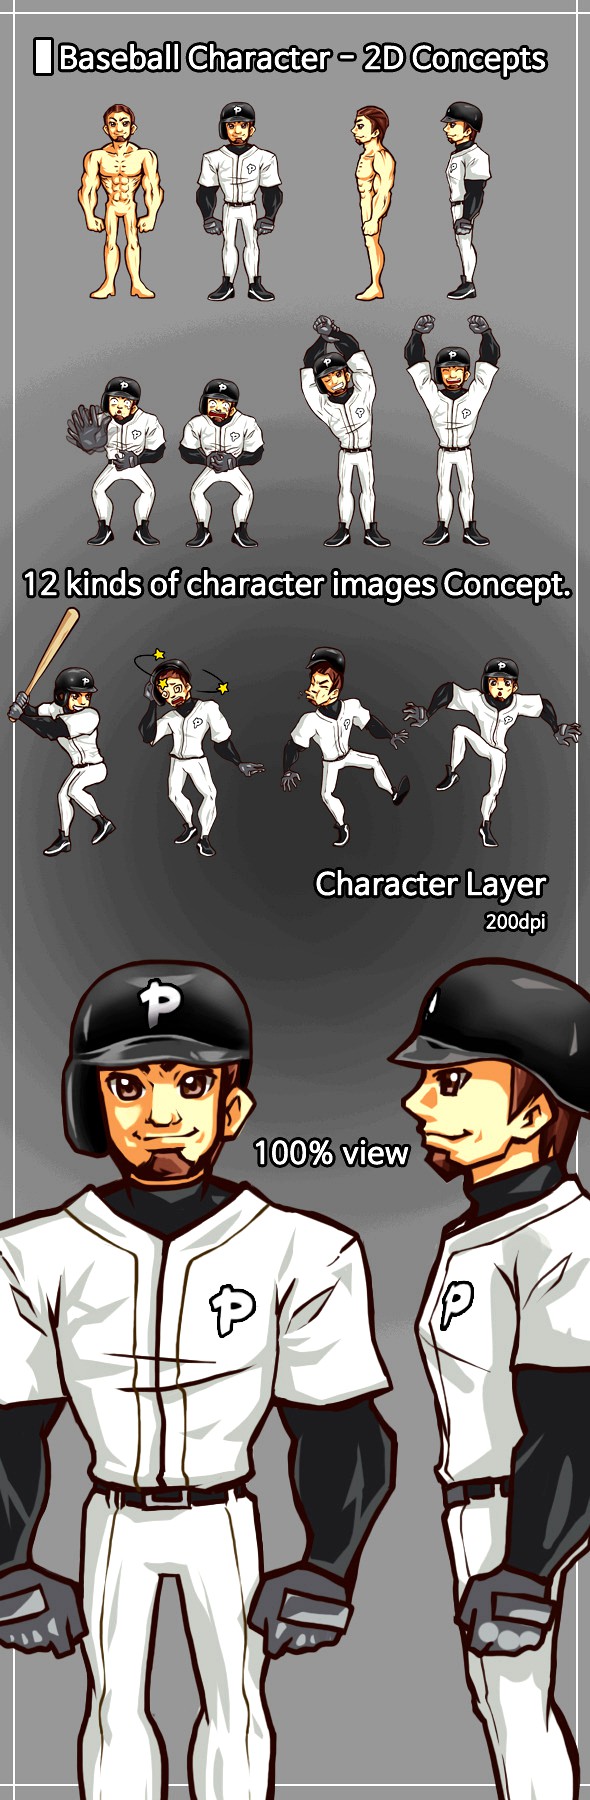 Baseball Character - 2D Concepts